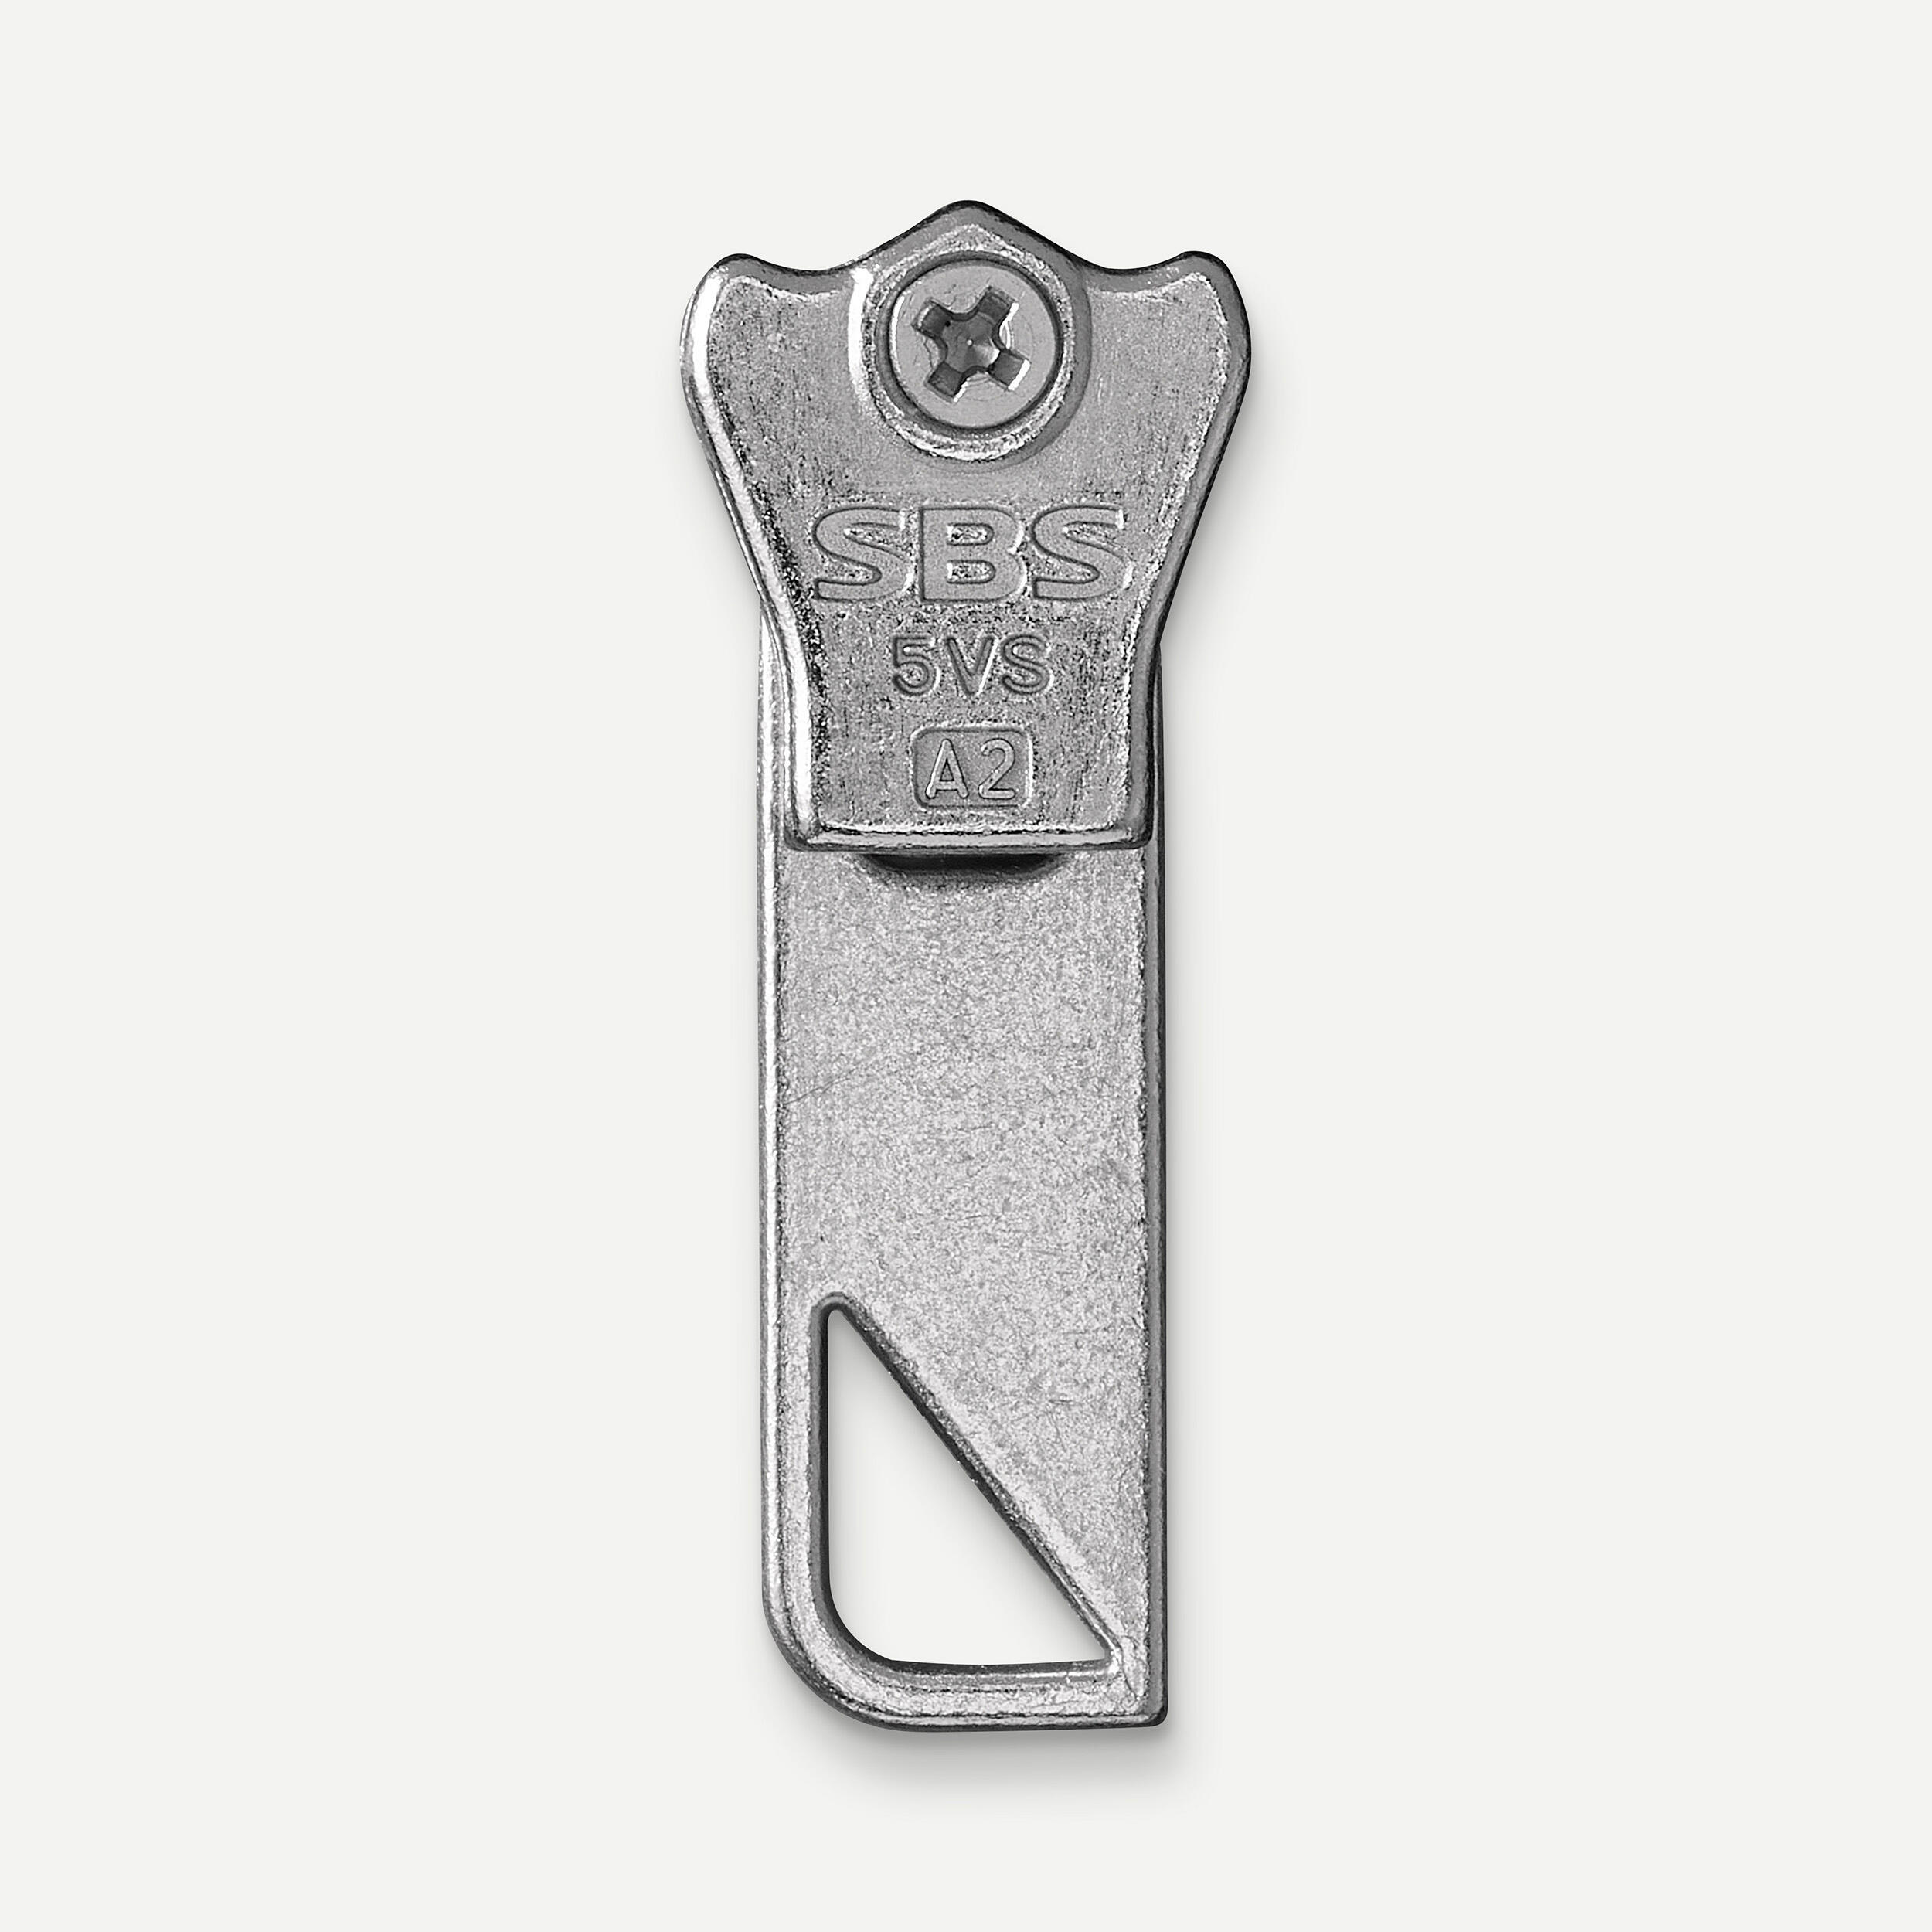 Repairable self-locking slider for 6mm plastic zip 5/5